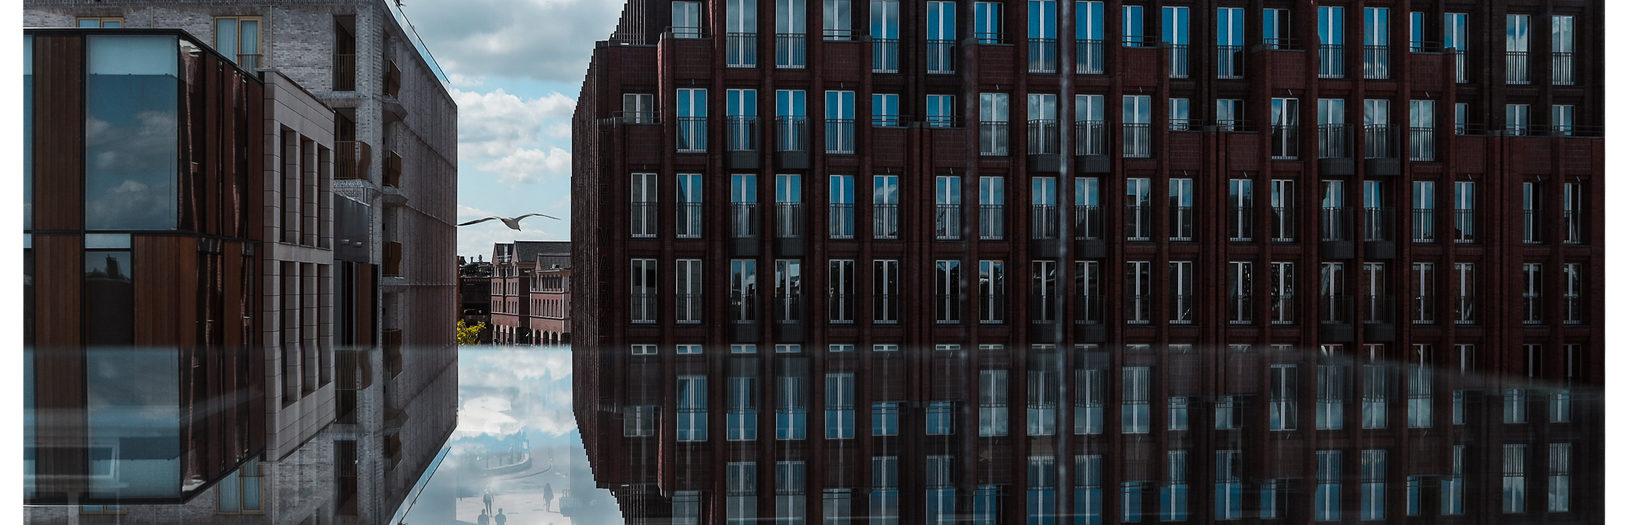 2022 Photos [Serie] Nearby [@The.Market.Hotel.Groningen] Project • by DillenvanderMolen @MrOfColorsPhotography [#MrOfColorsPhotography]